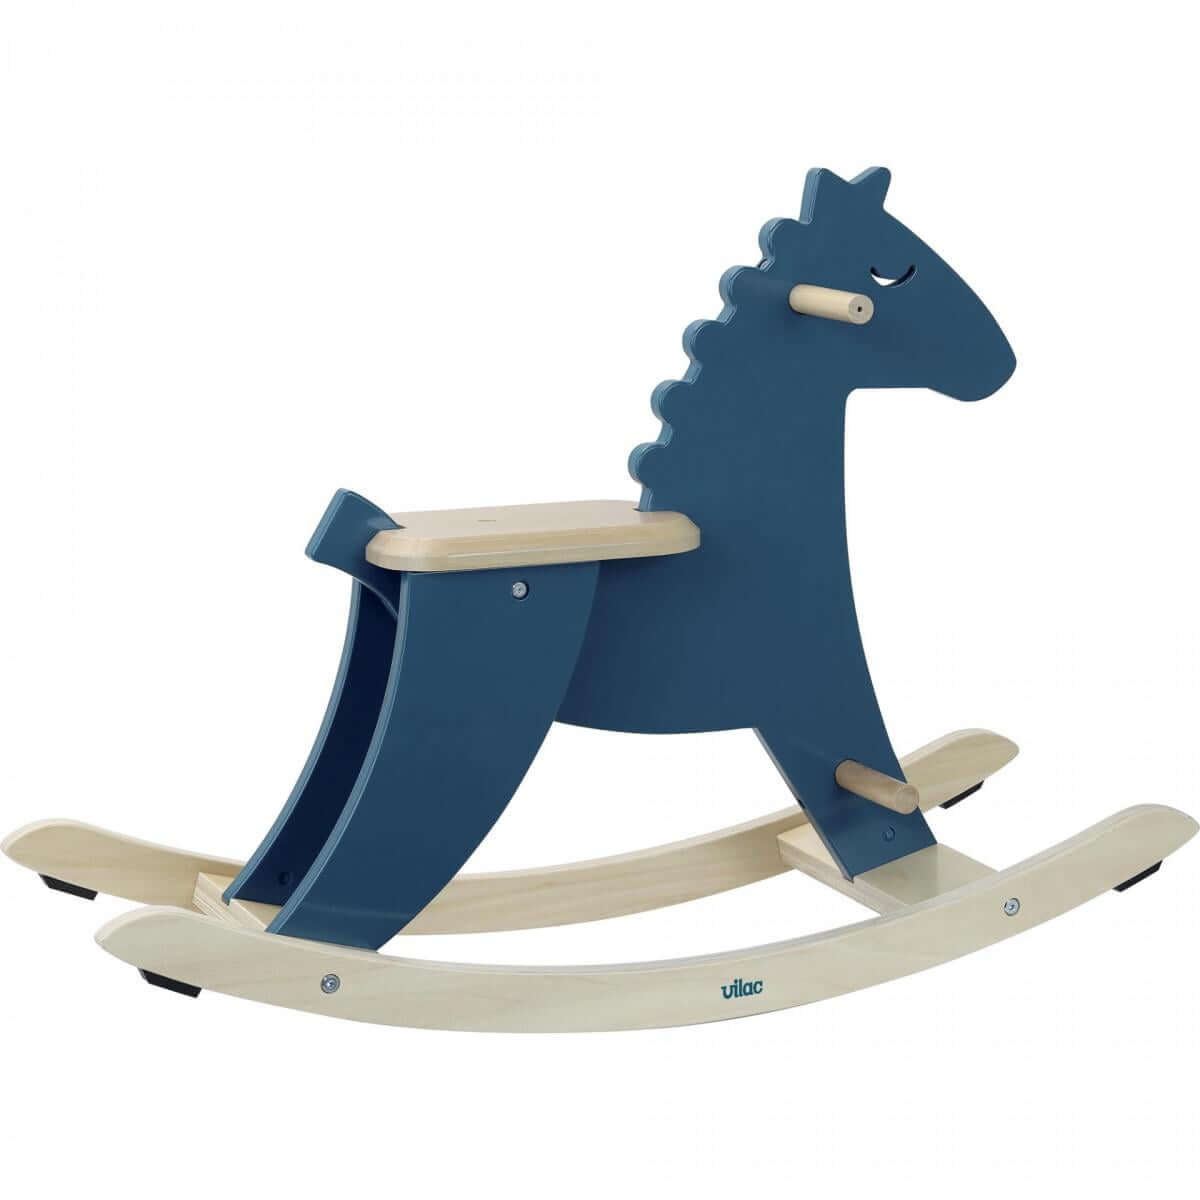 Vilac Hudada Rocking Horse (Blue)